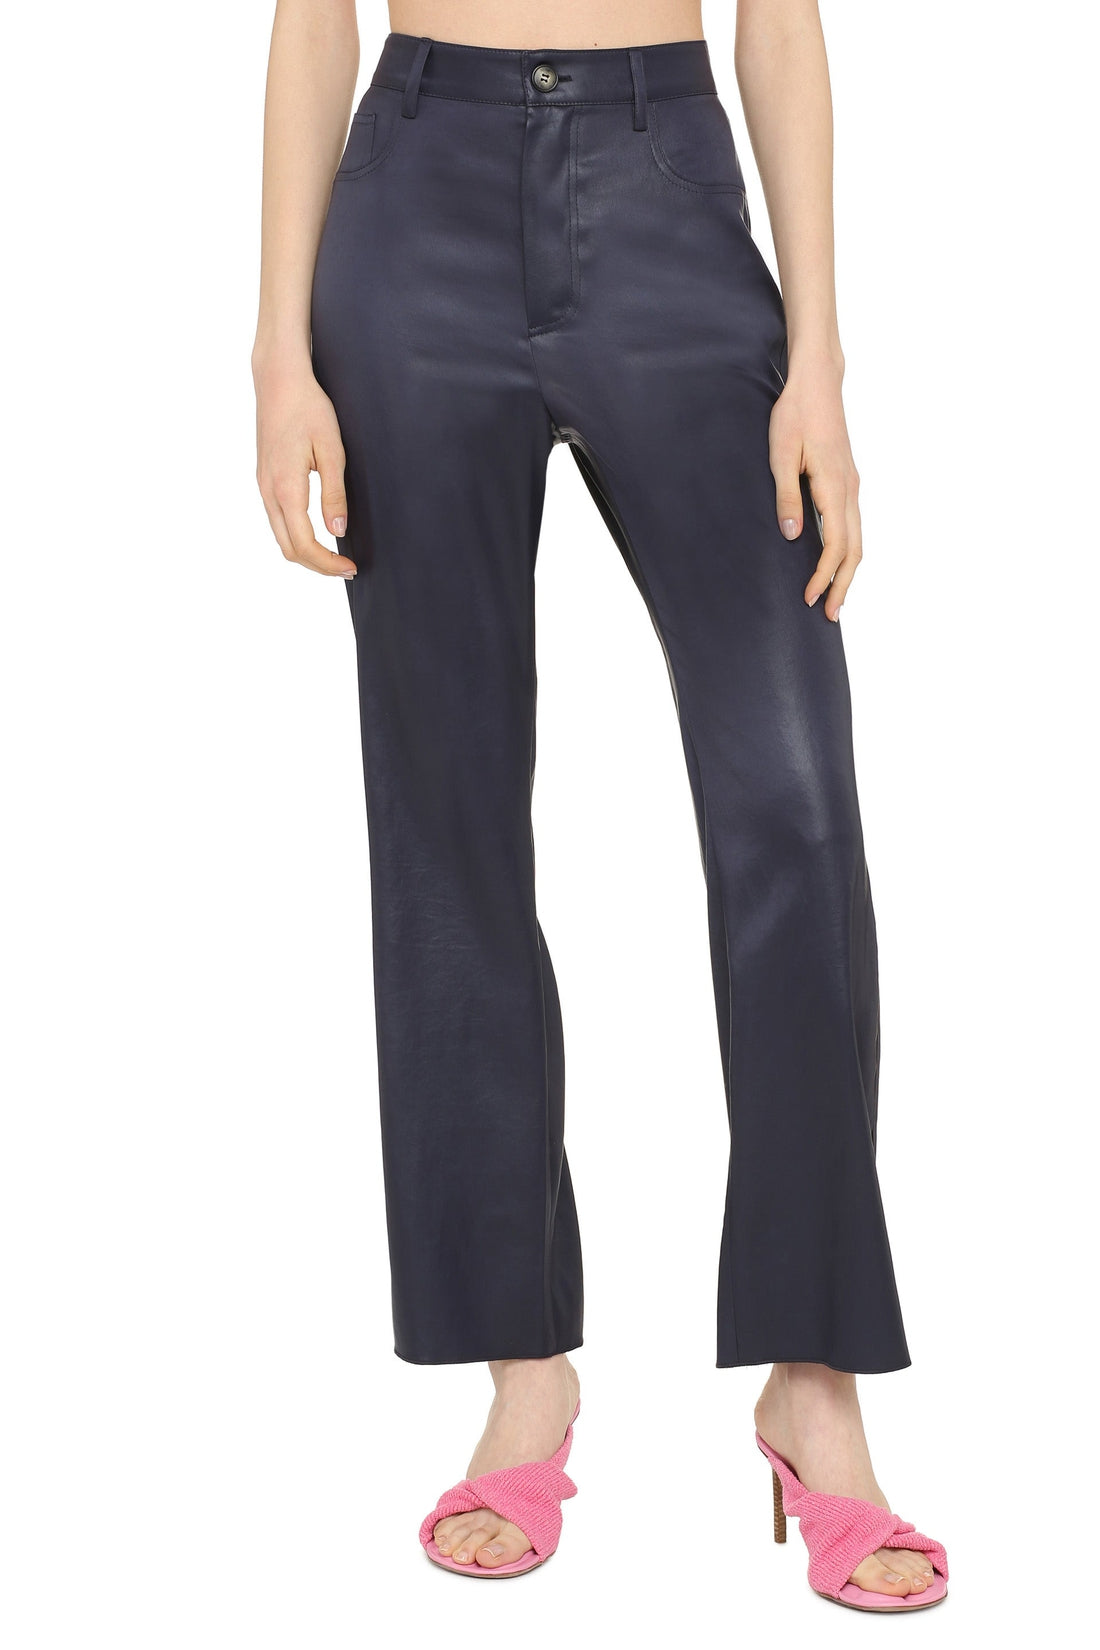 Nanushka-OUTLET-SALE-Vaeda flared trousers-ARCHIVIST